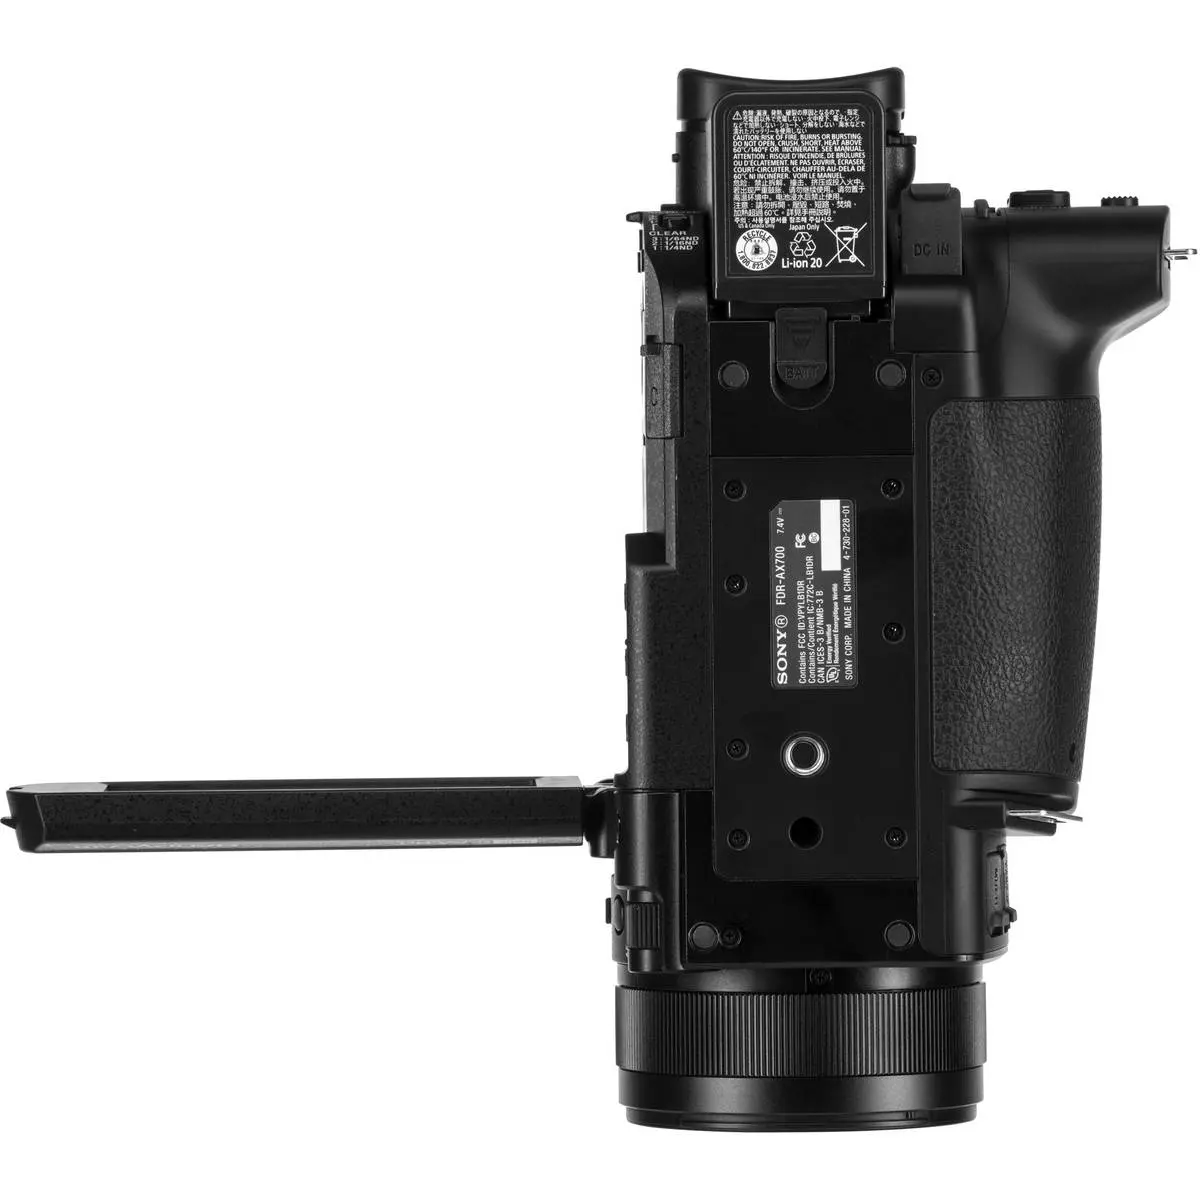 10. Sony FDR-AX700 4K Camcorder PAL